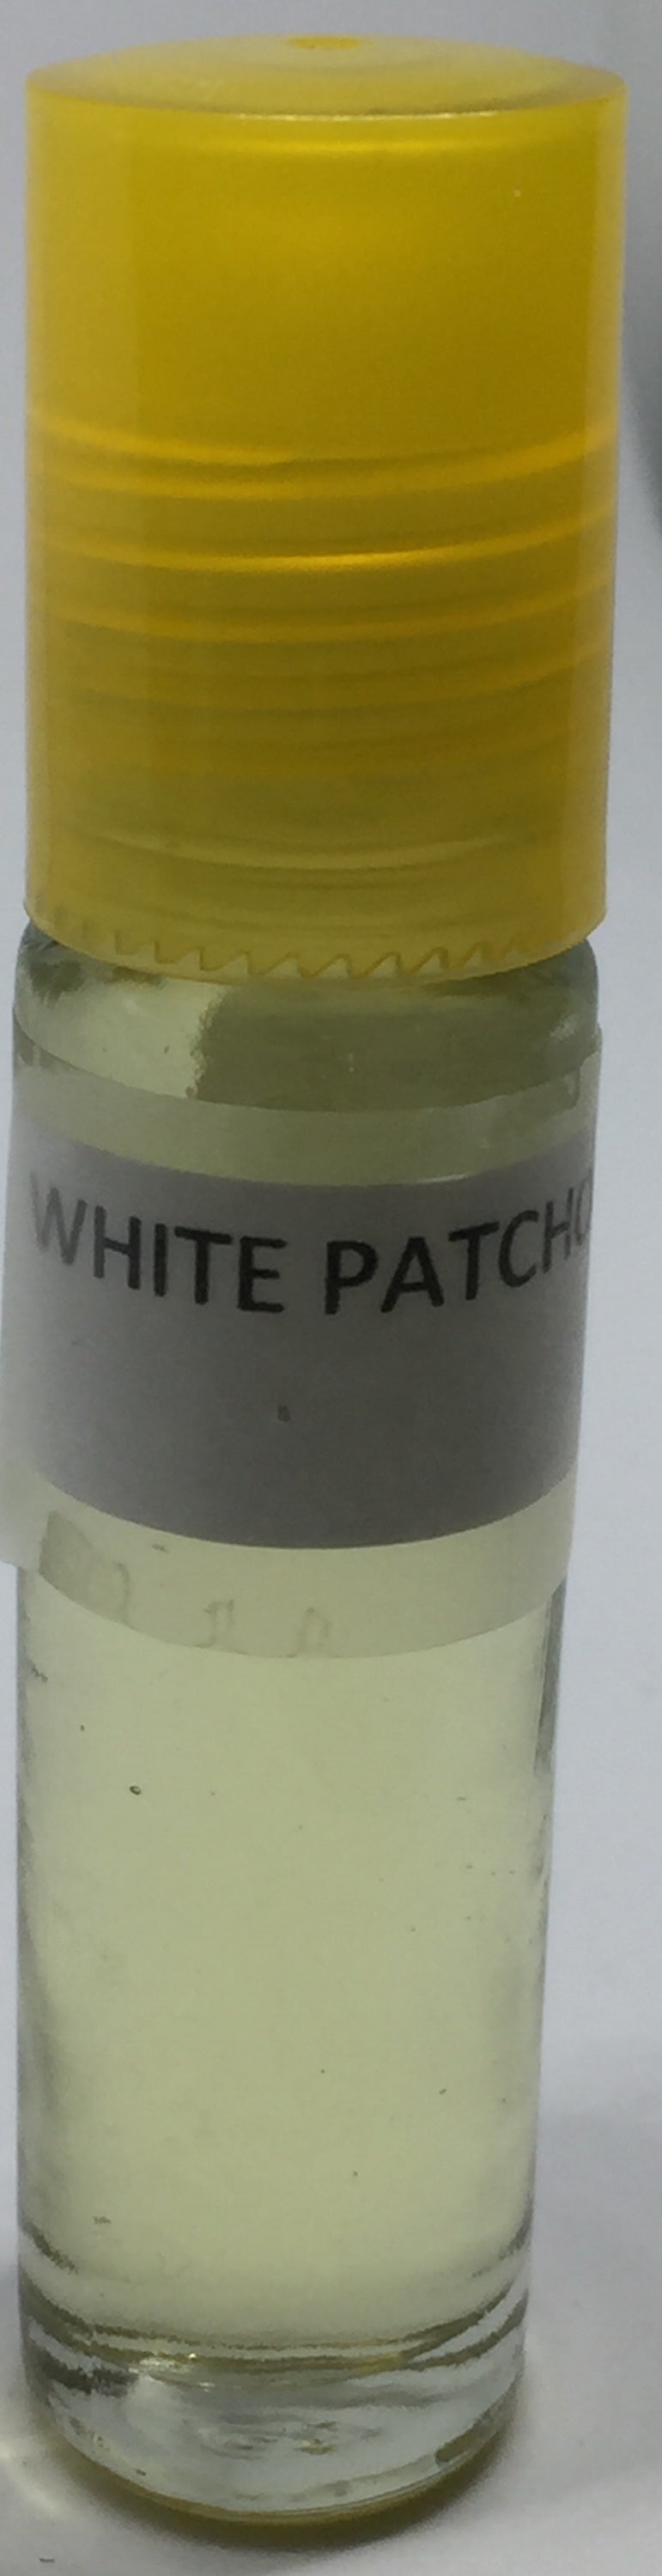 White Patchouli: Fragrance(Perfume) Body Oil Women